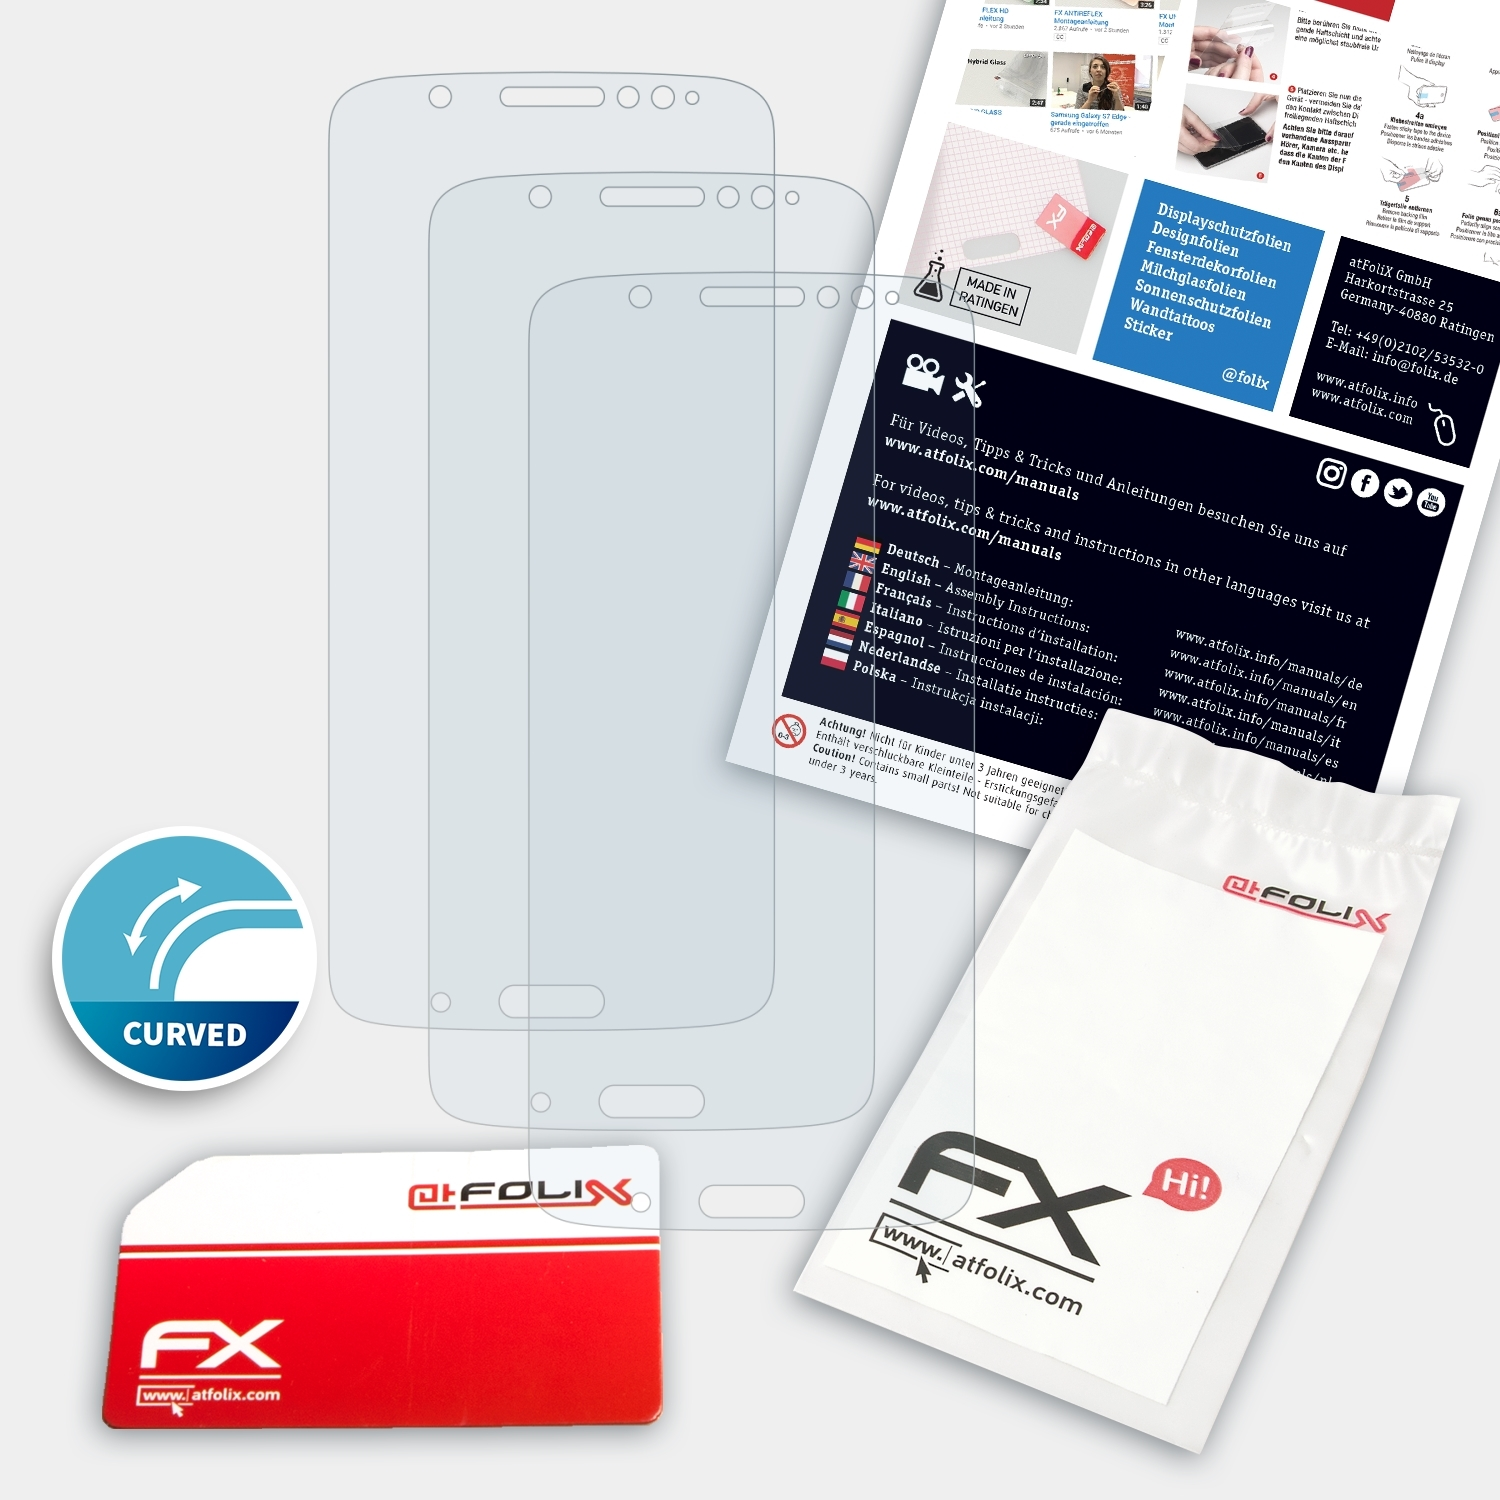 3x Lenovo Moto FX-ActiFleX Plus) ATFOLIX G6 Motorola Displayschutz(für